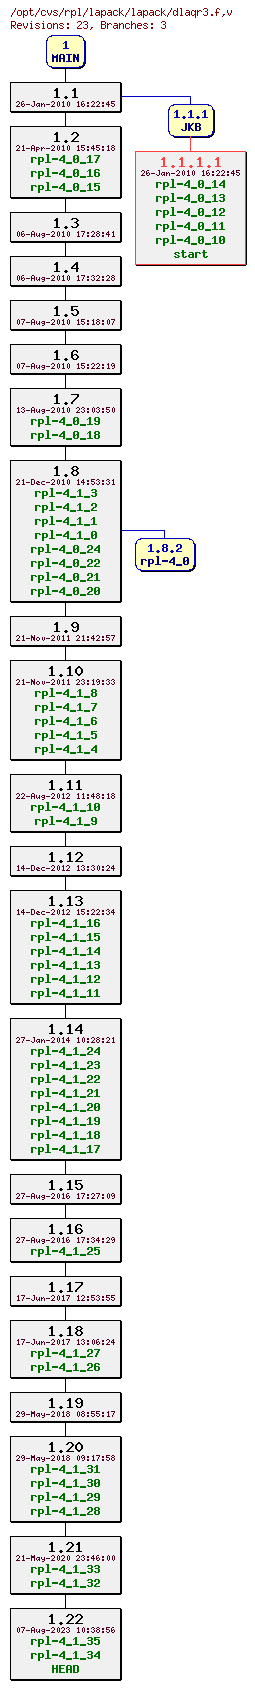 Revision graph of rpl/lapack/lapack/dlaqr3.f